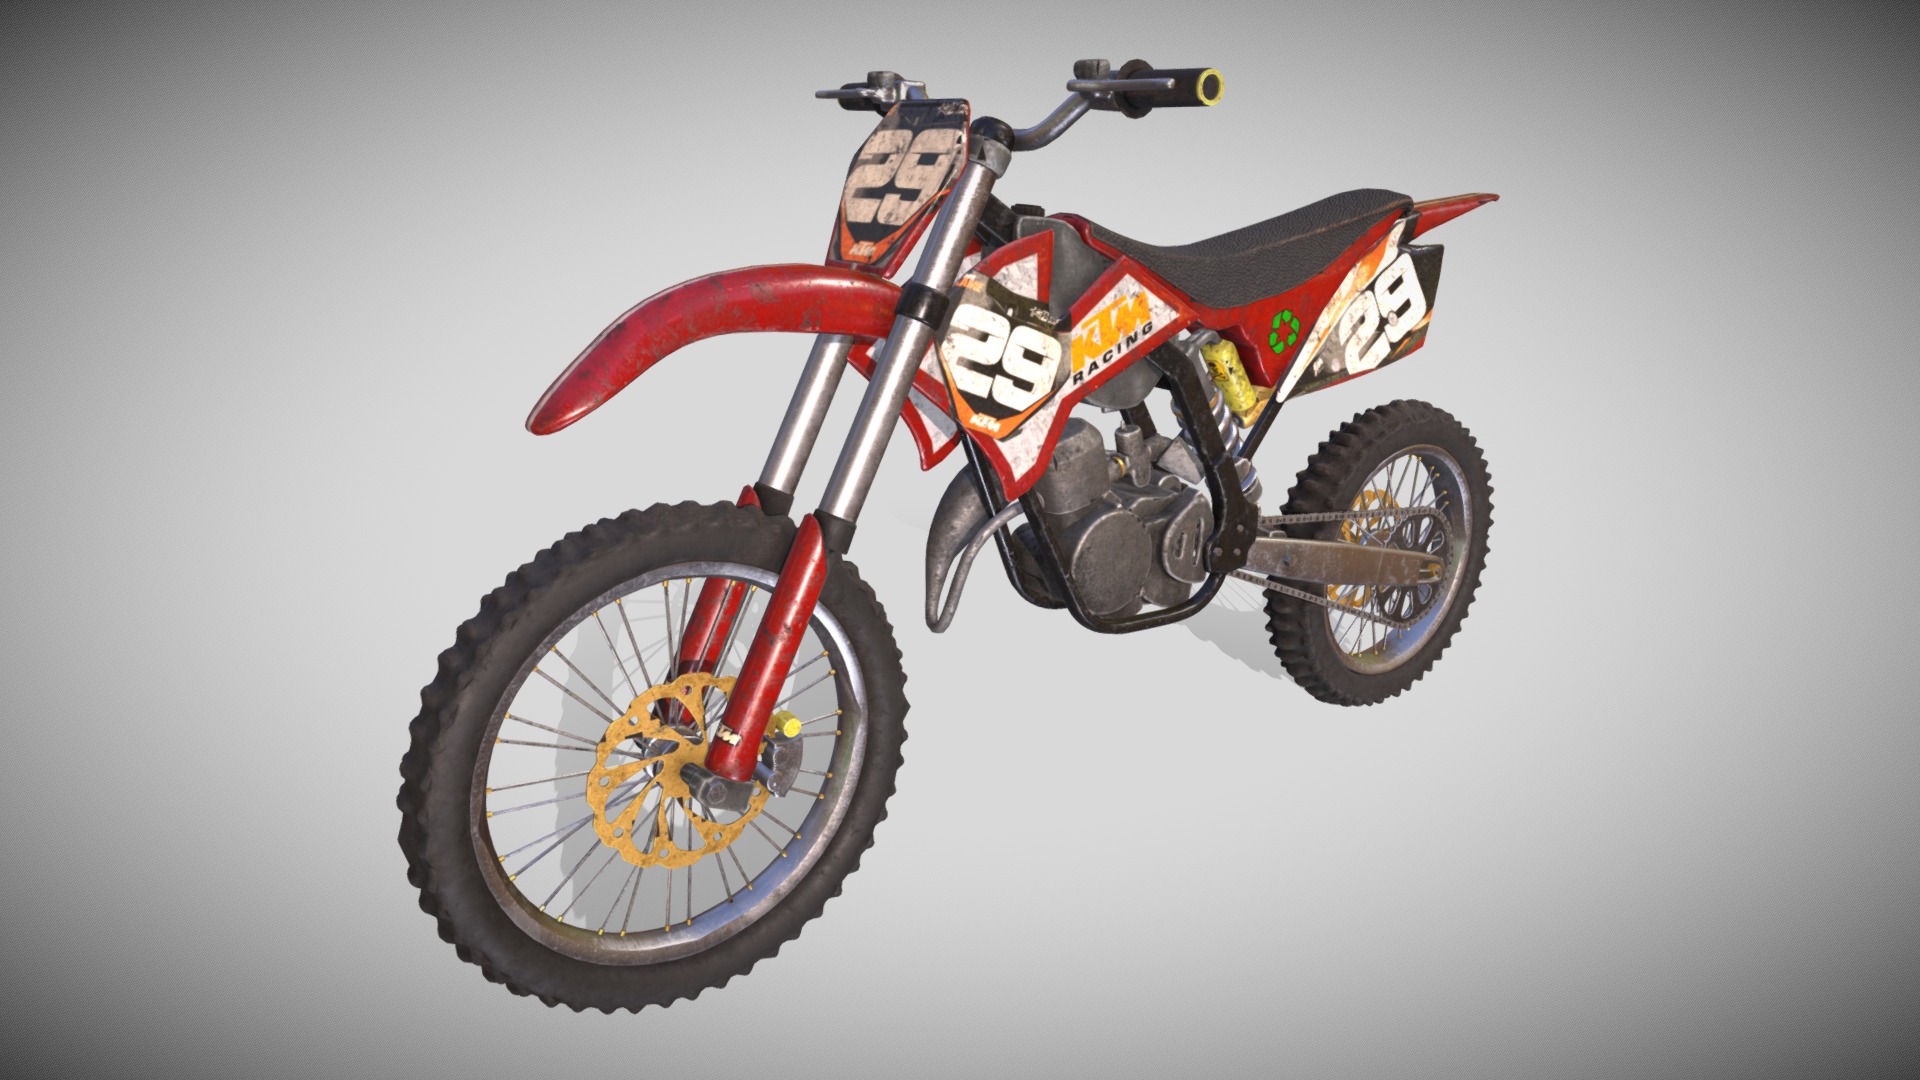 3D model Bike Ktm - This is a 3D model of the Bike Ktm. The 3D model is about a dirt bike with a red and black body.